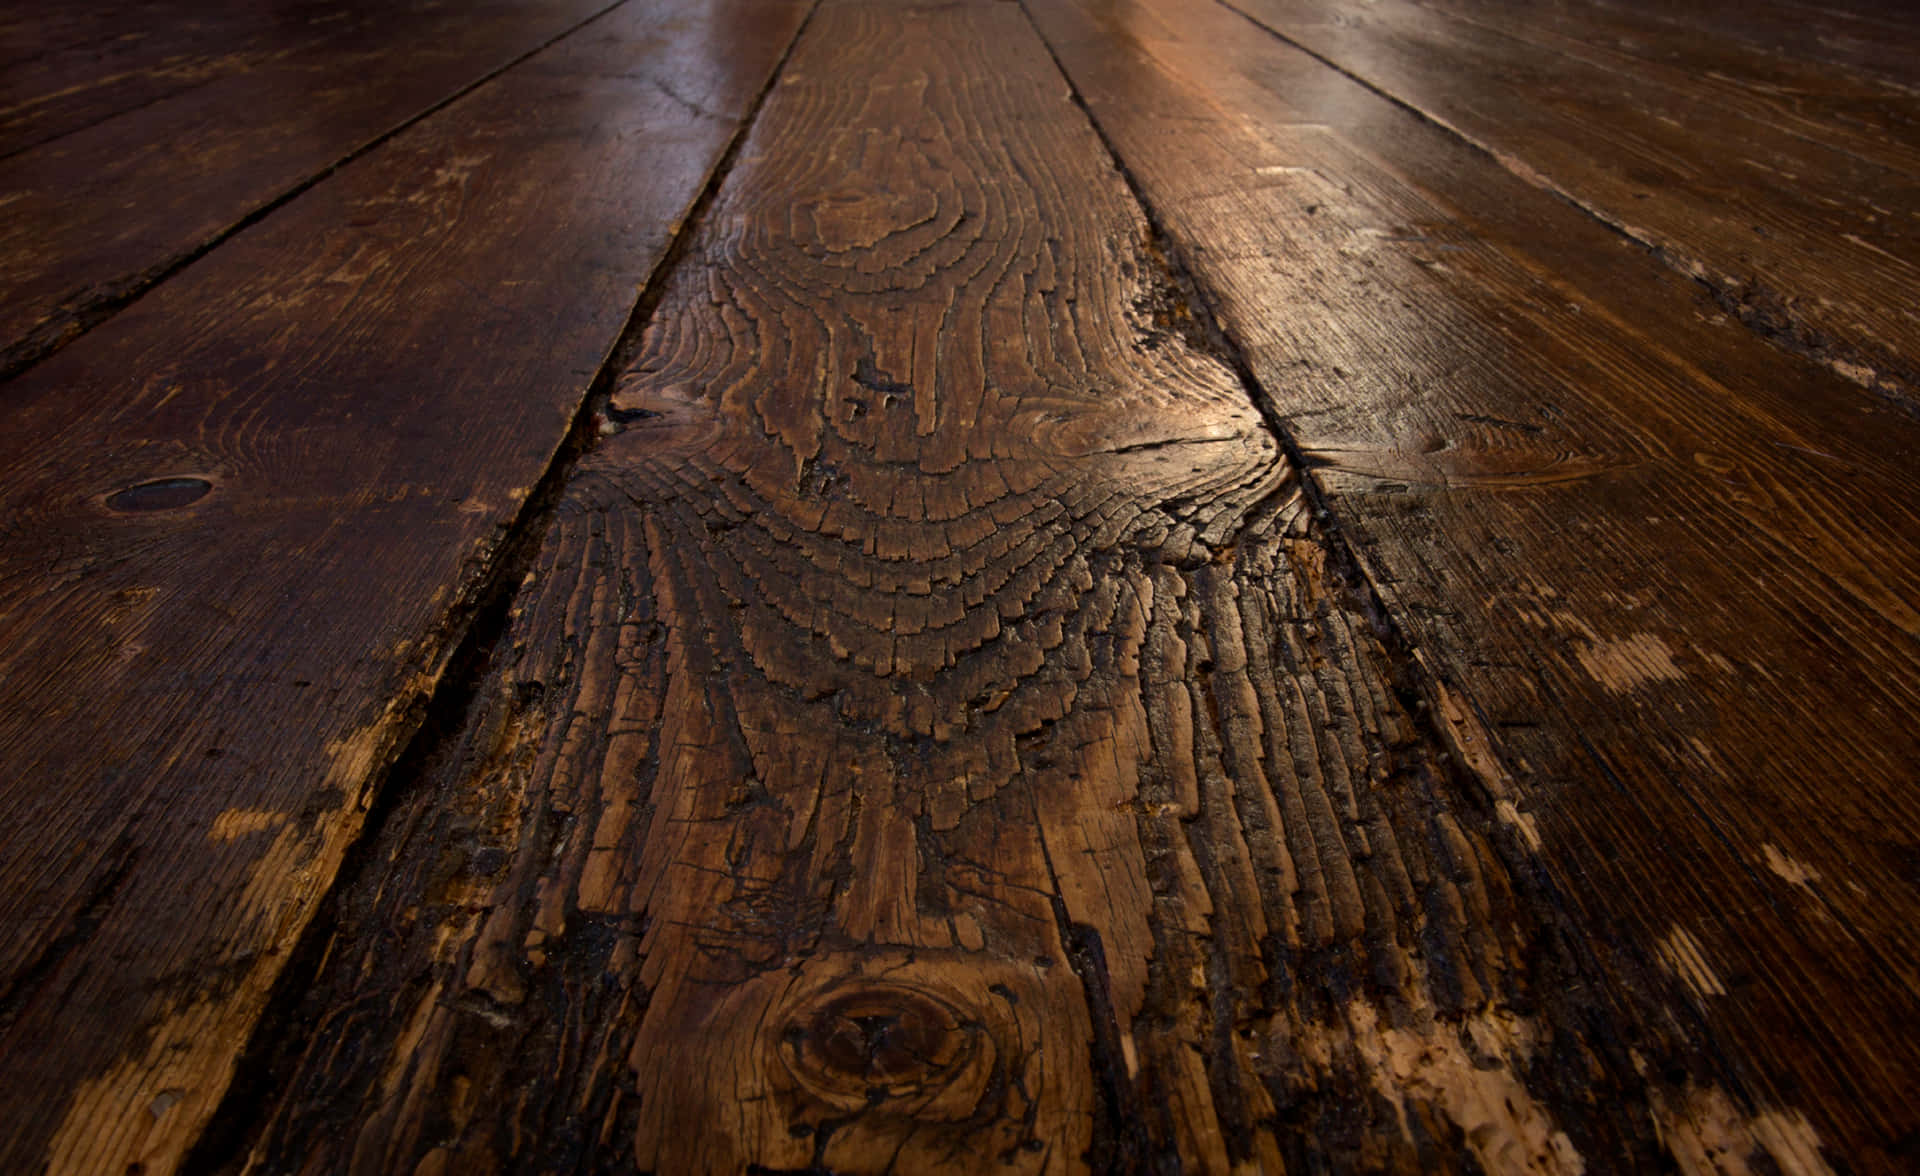 A Wooden Floor In A Room